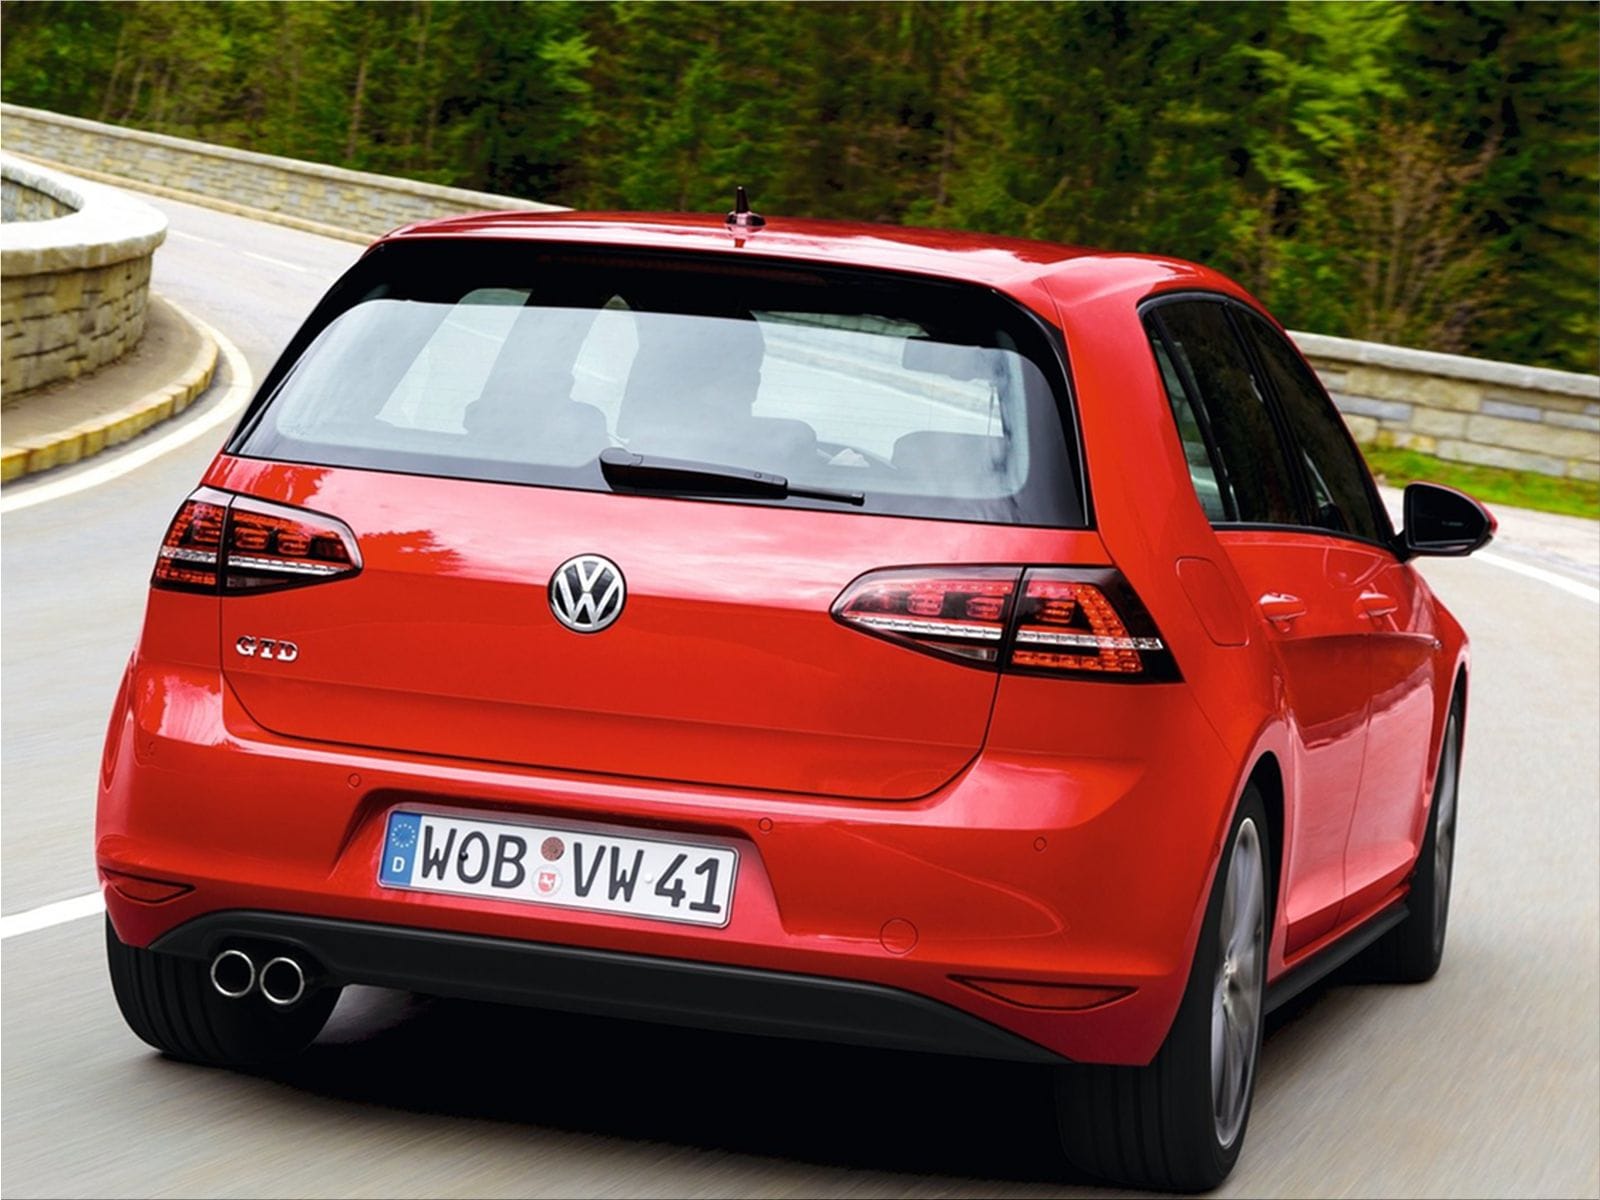 2014 Volkswagen Golf GTD (Gran Turismo Diesel)Volkswagen